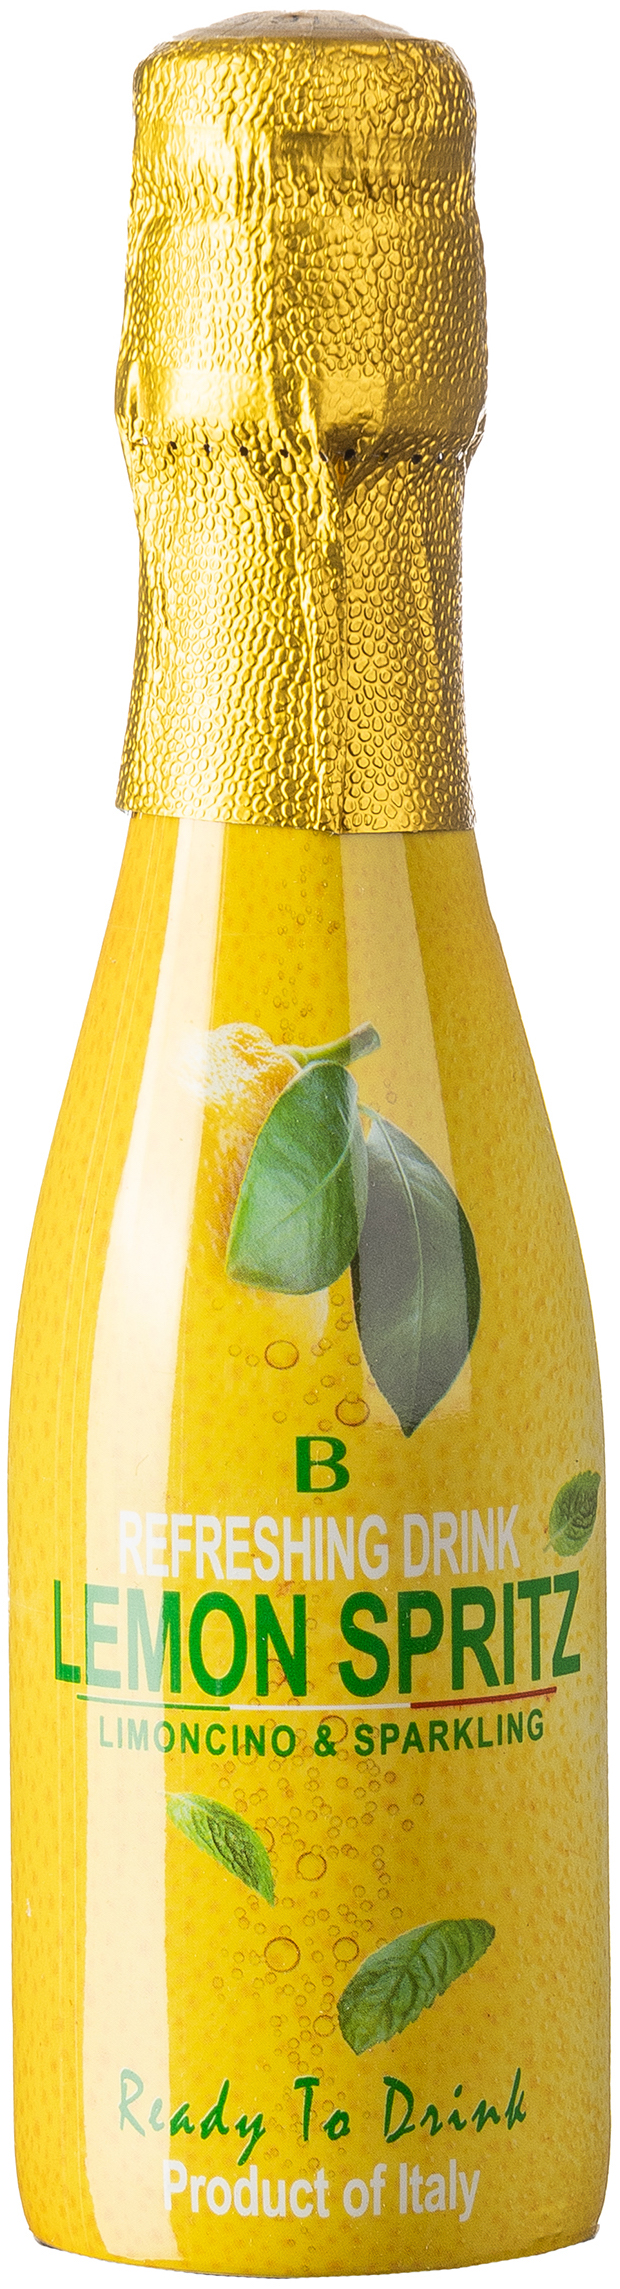 Bottega Lemon Spritz 5,4% vol. 0,2L